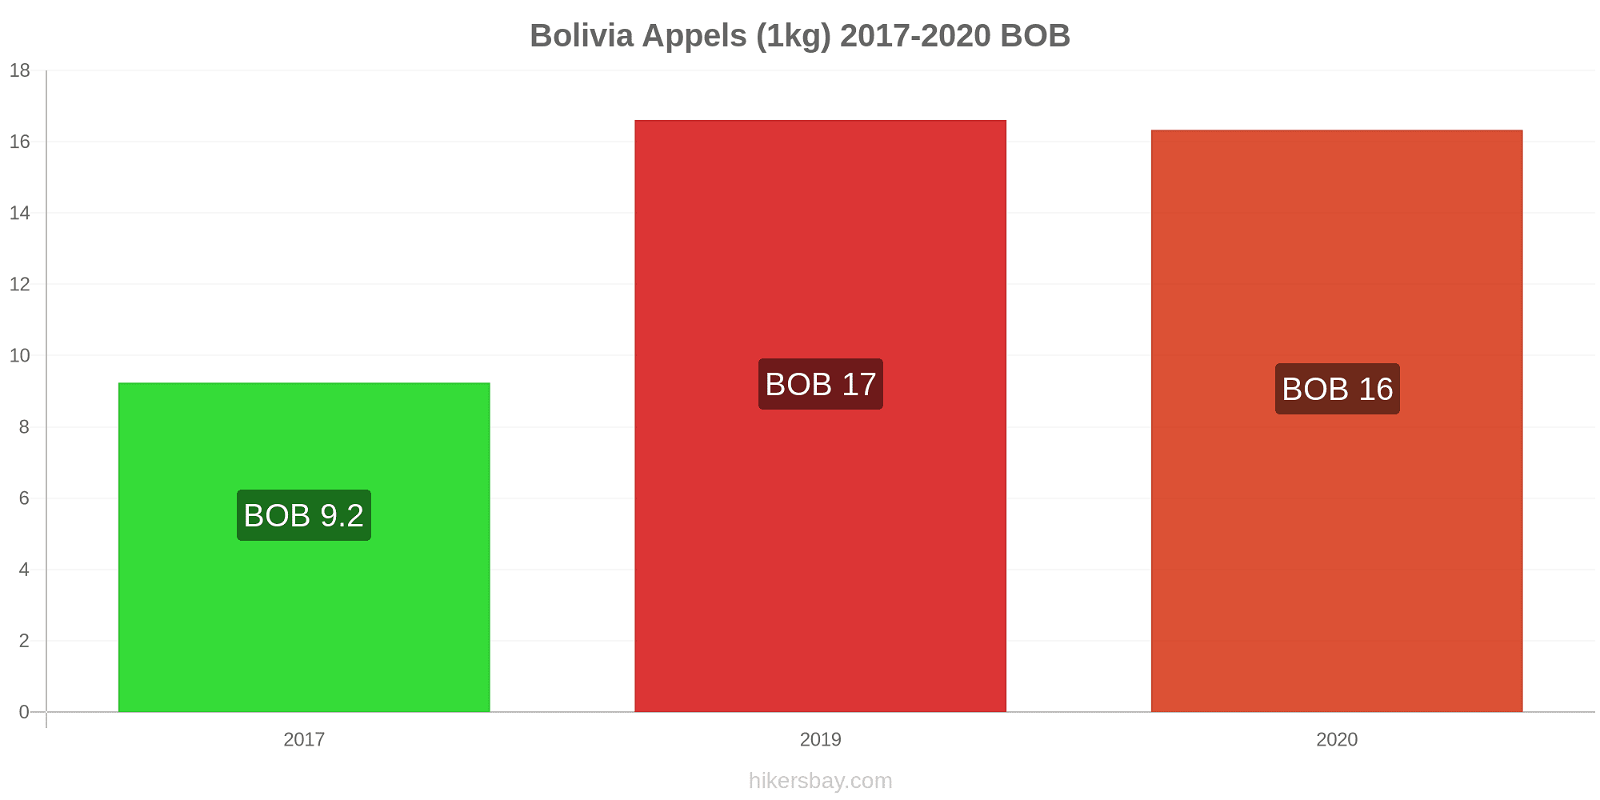 Bolivia prijswijzigingen Appels (1kg) hikersbay.com